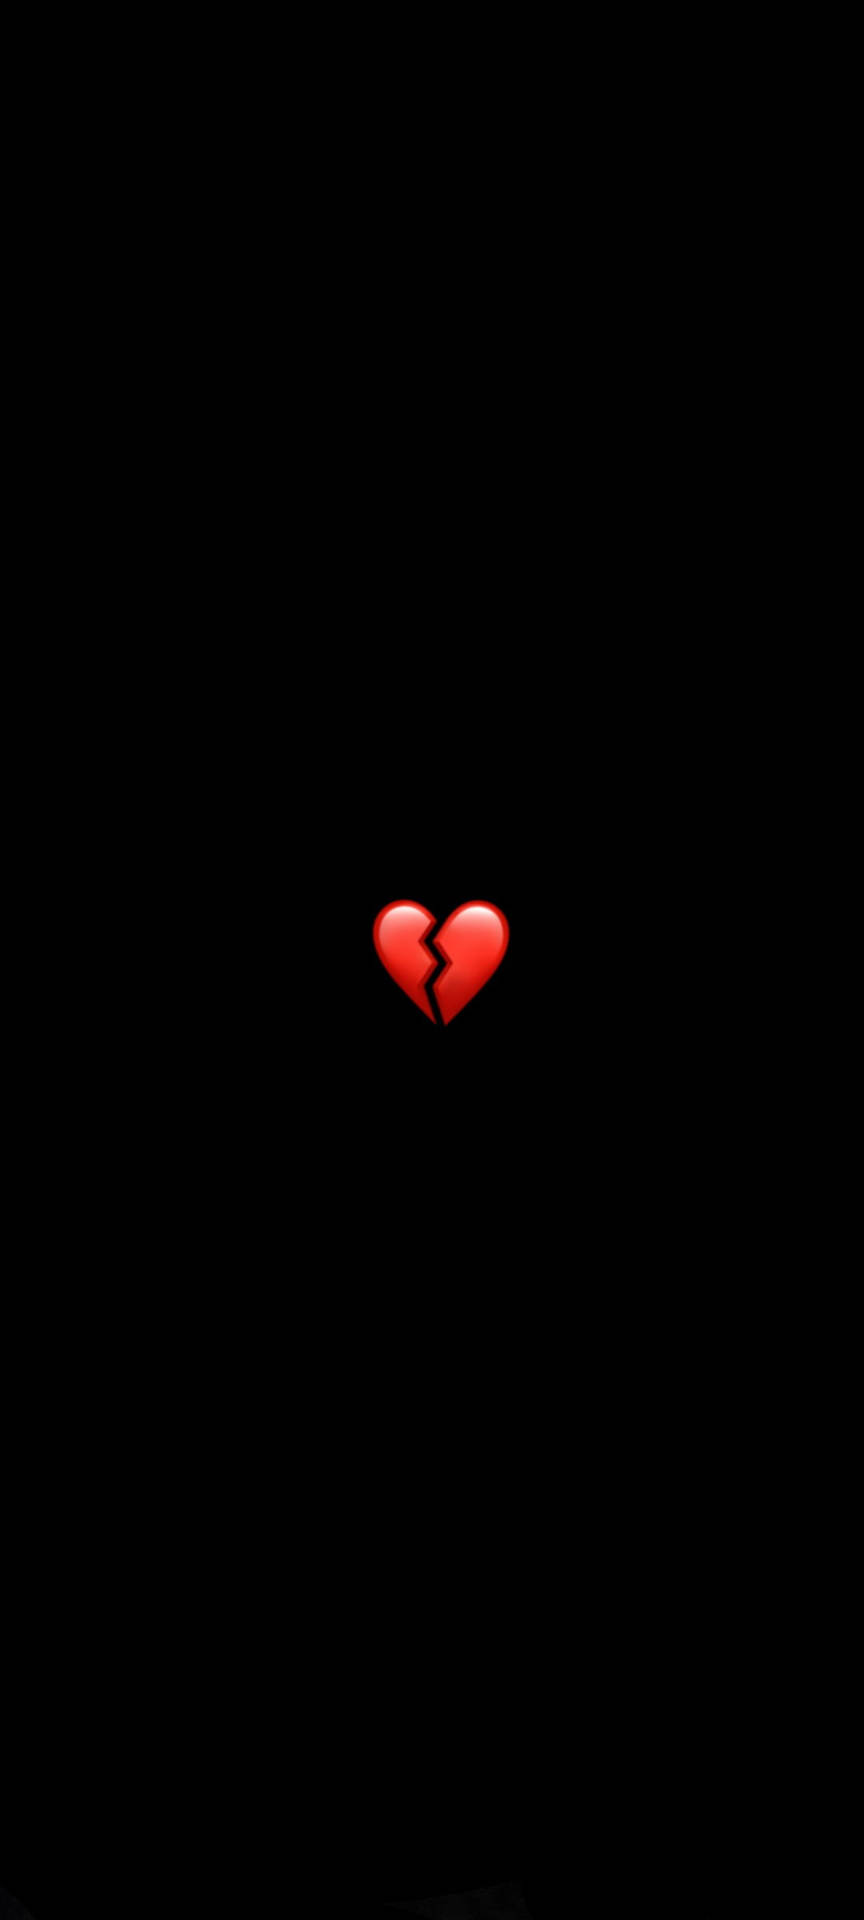 Download Emoji Of A Broken Heart Black Wallpaper | Wallpapers.com